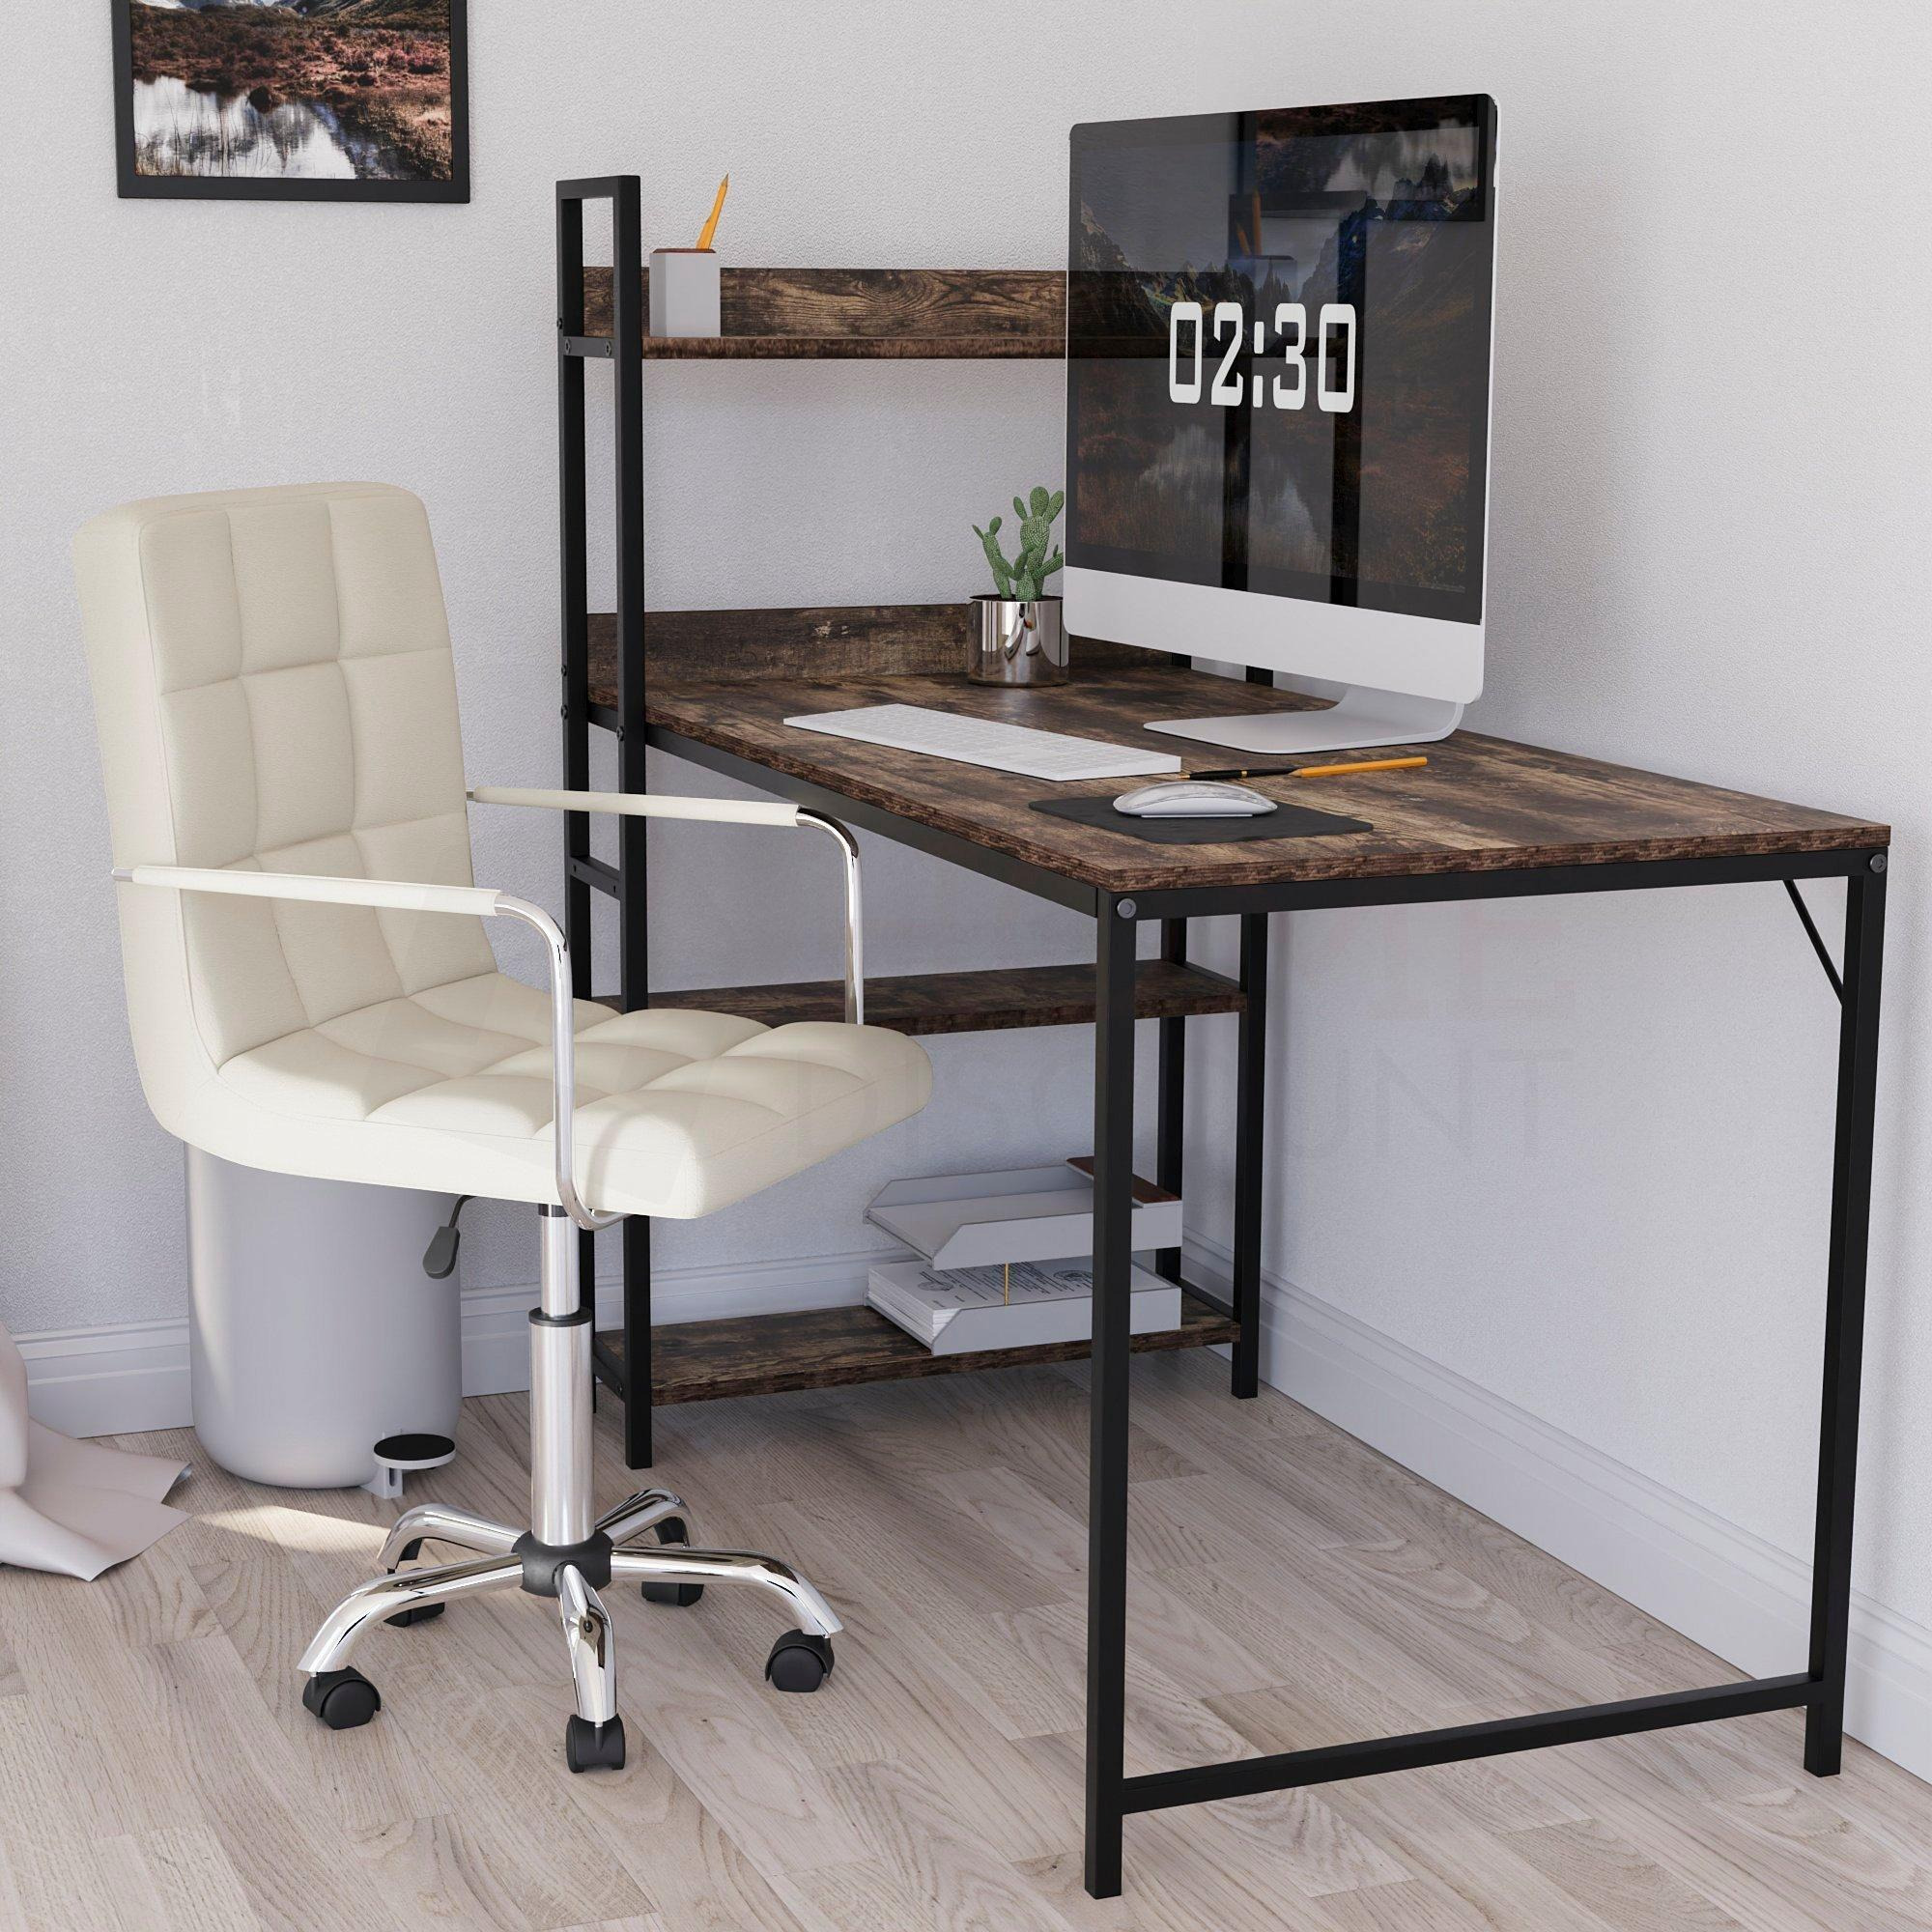 Vida Designs Calbo Adjustable Office Chair Backrest Armrest Ergonomic - image 1